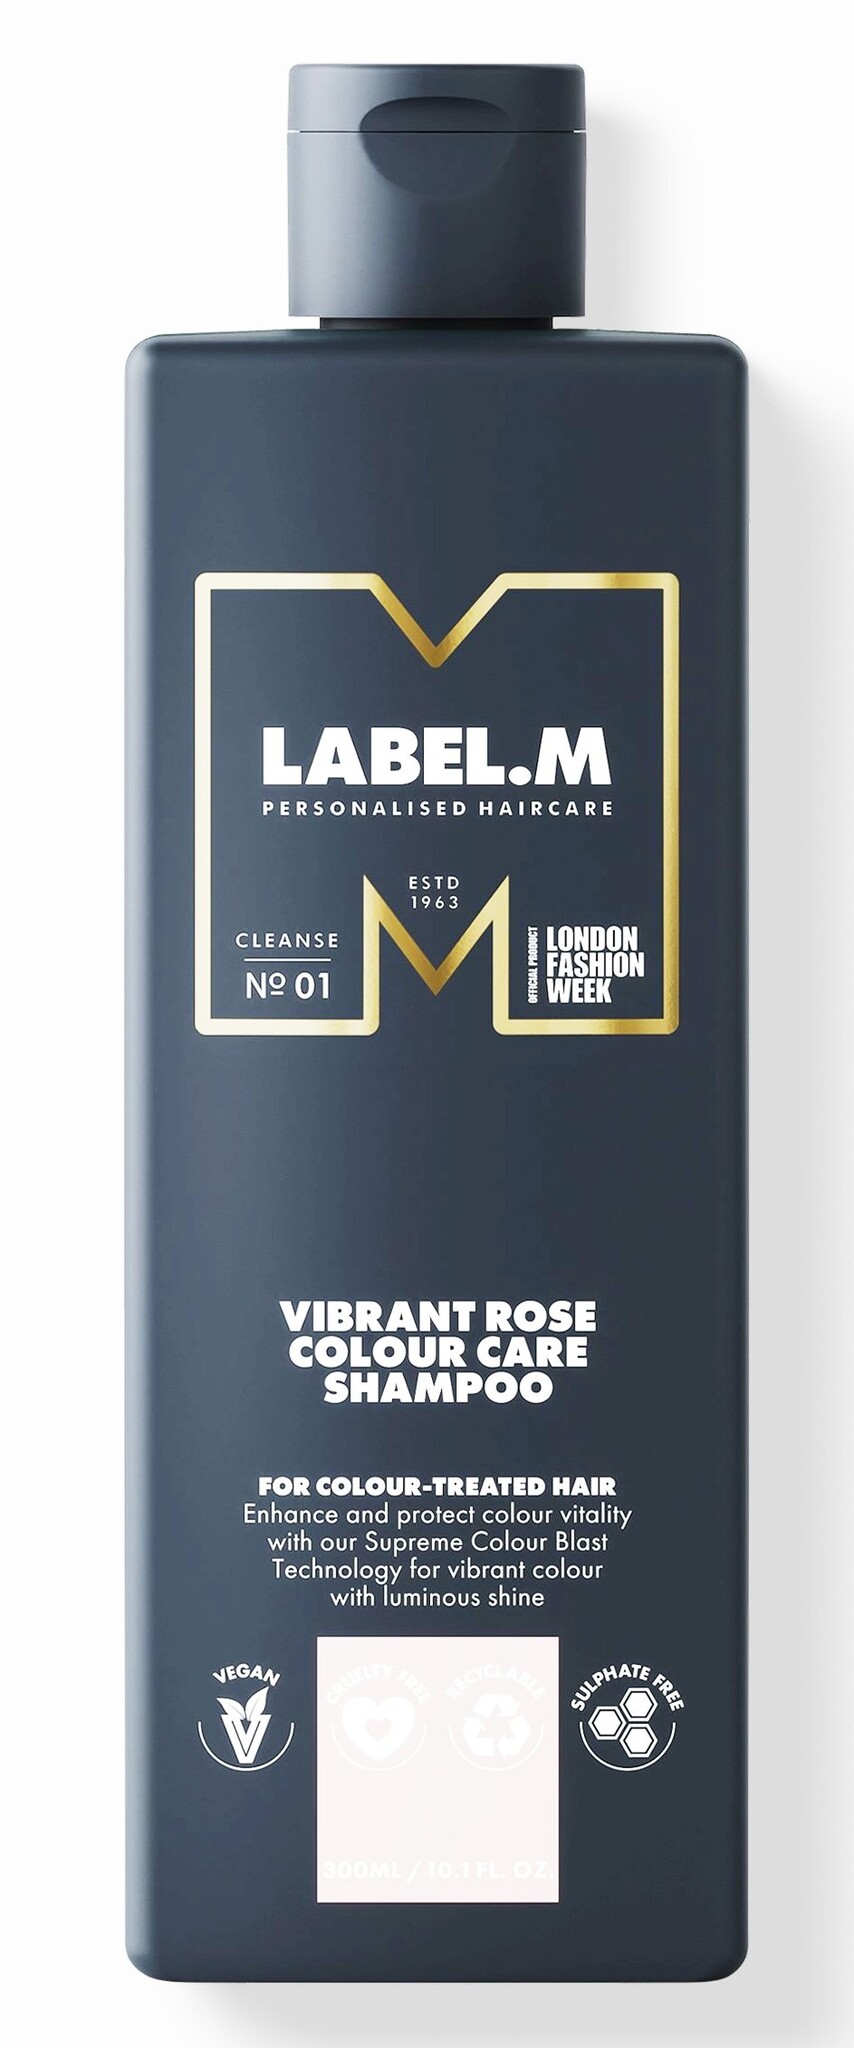 Label.m Vibrant Rose Colour Care Shampoo 300ml